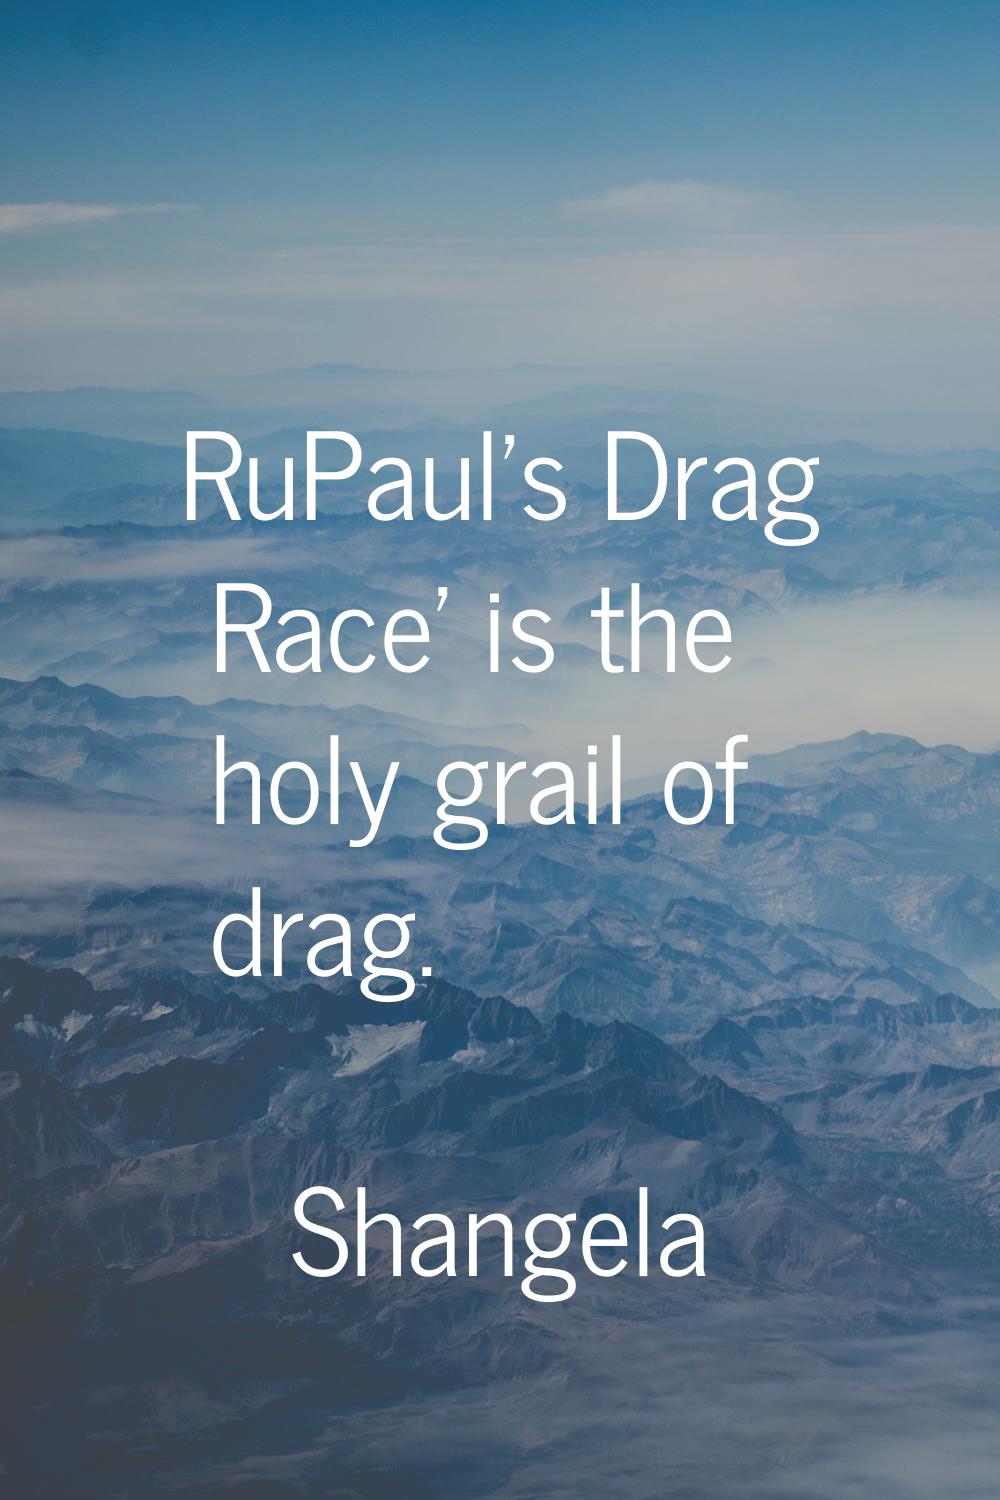 RuPaul's Drag Race' is the holy grail of drag.